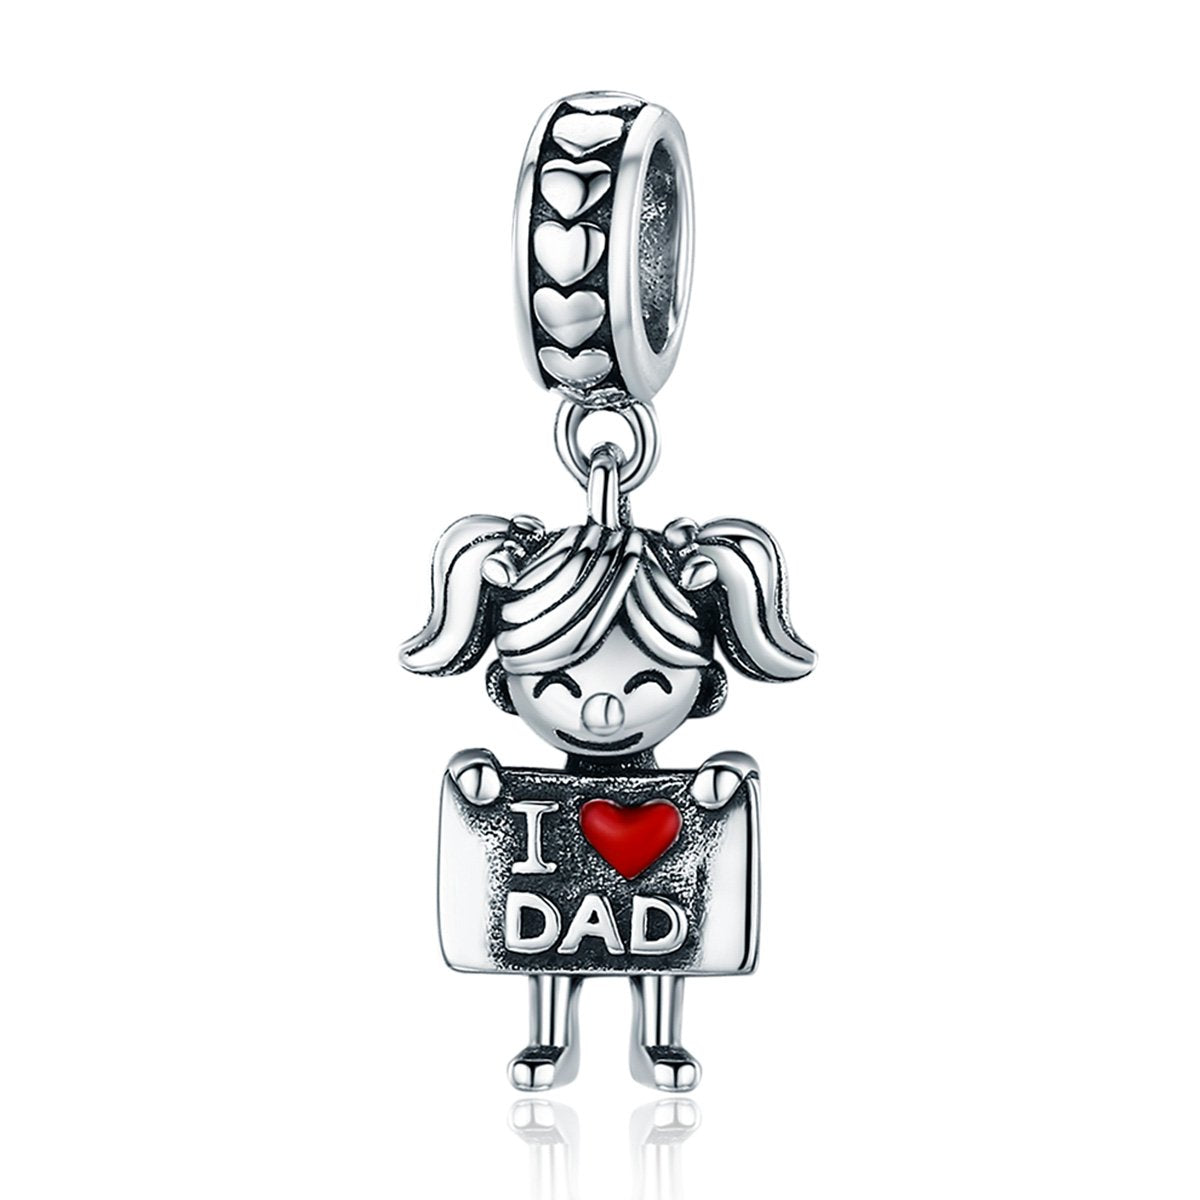 Sterling 925 silver charm the I love Dad pendant fits Pandora charm and European charm bracelet Xaxe.com